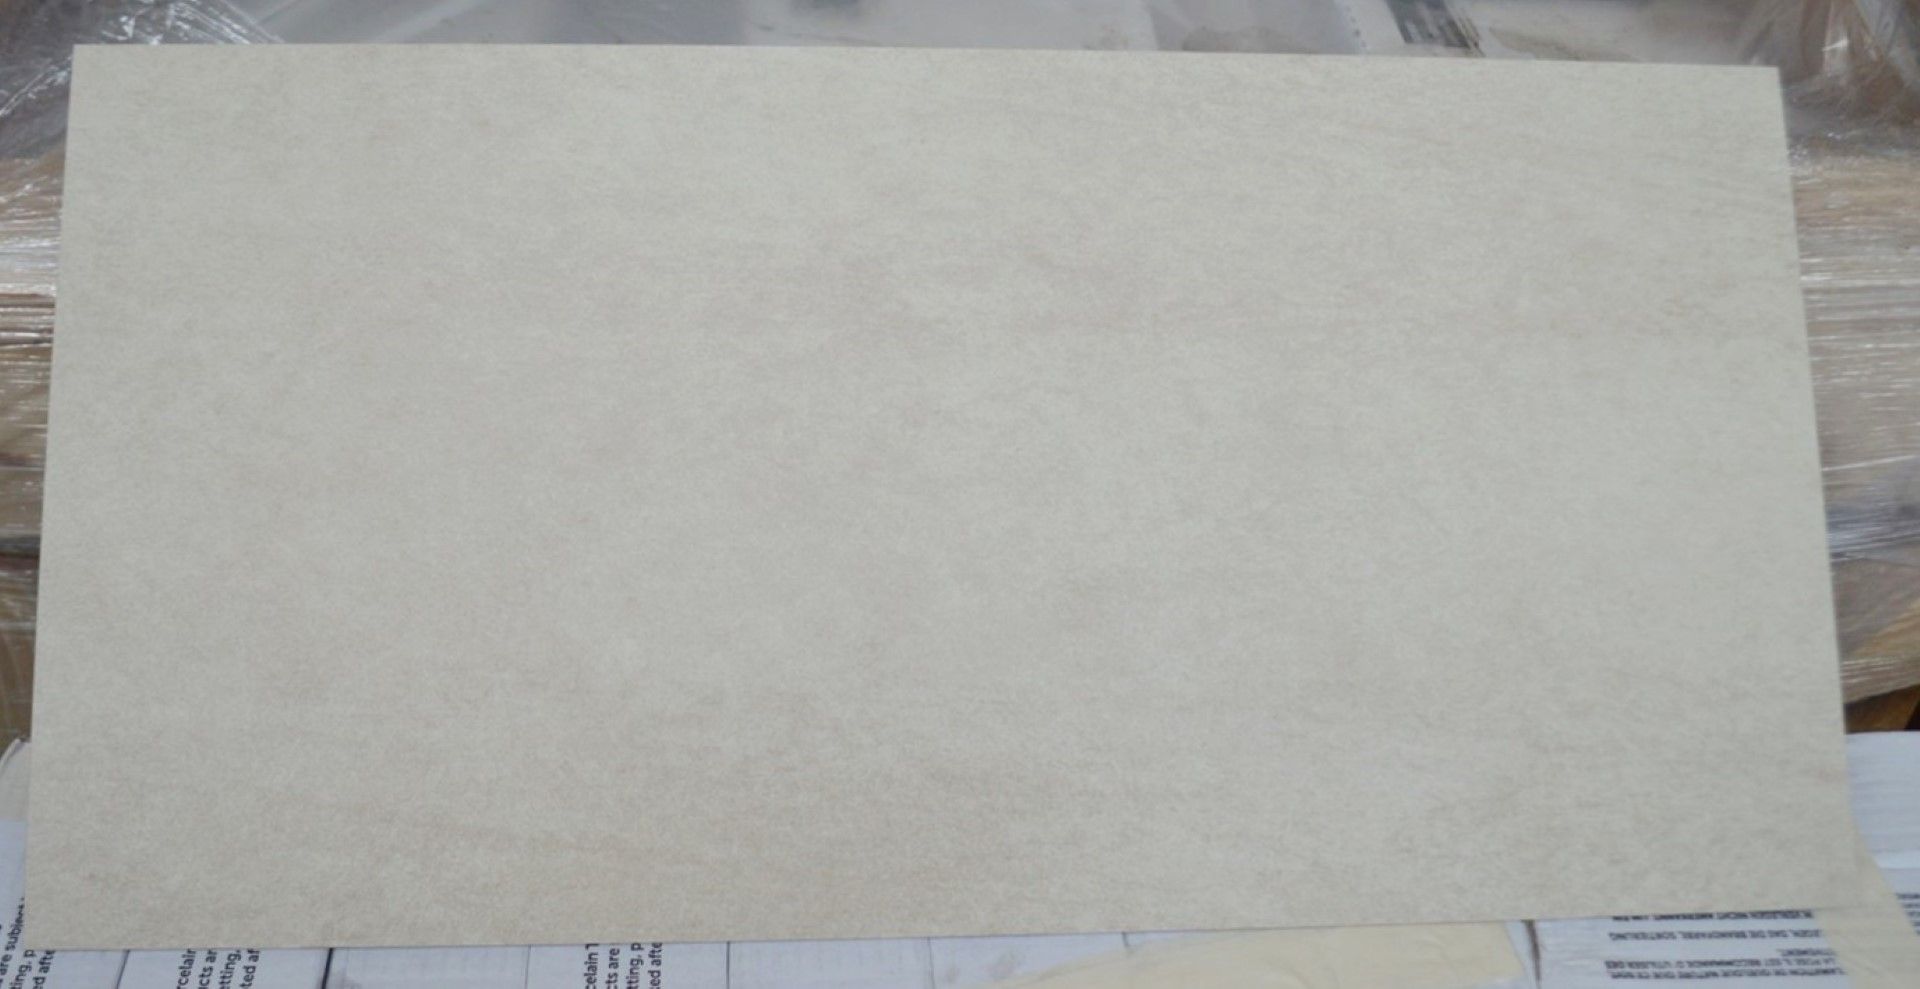 12 x Boxes of RAK Porcelain Floor or Wall Tiles - Concrete Sand Design in Beige - 30 x 60 - Image 7 of 8